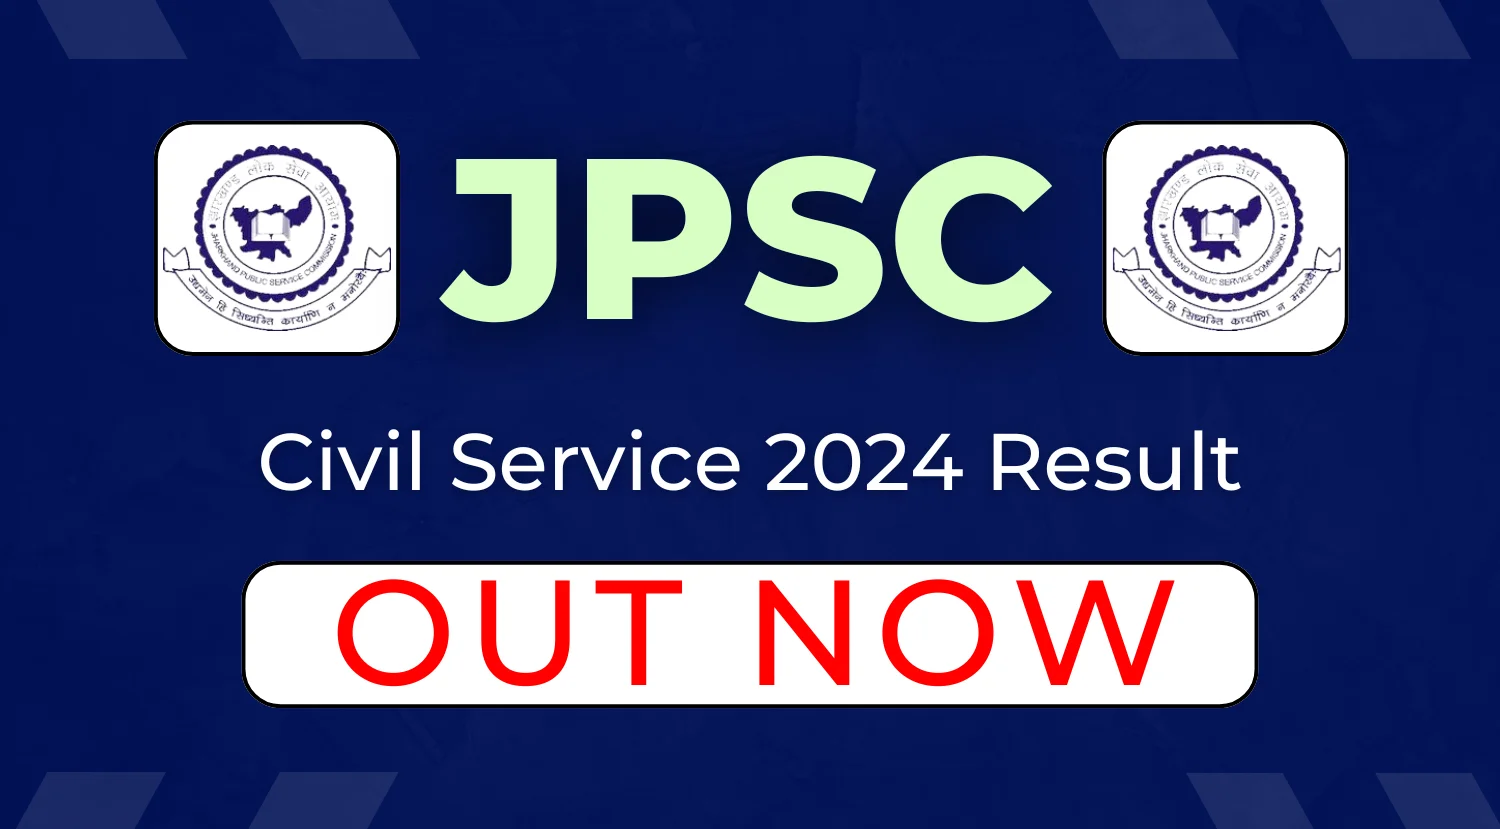 JPSC Civil Service 2024 Result OUT